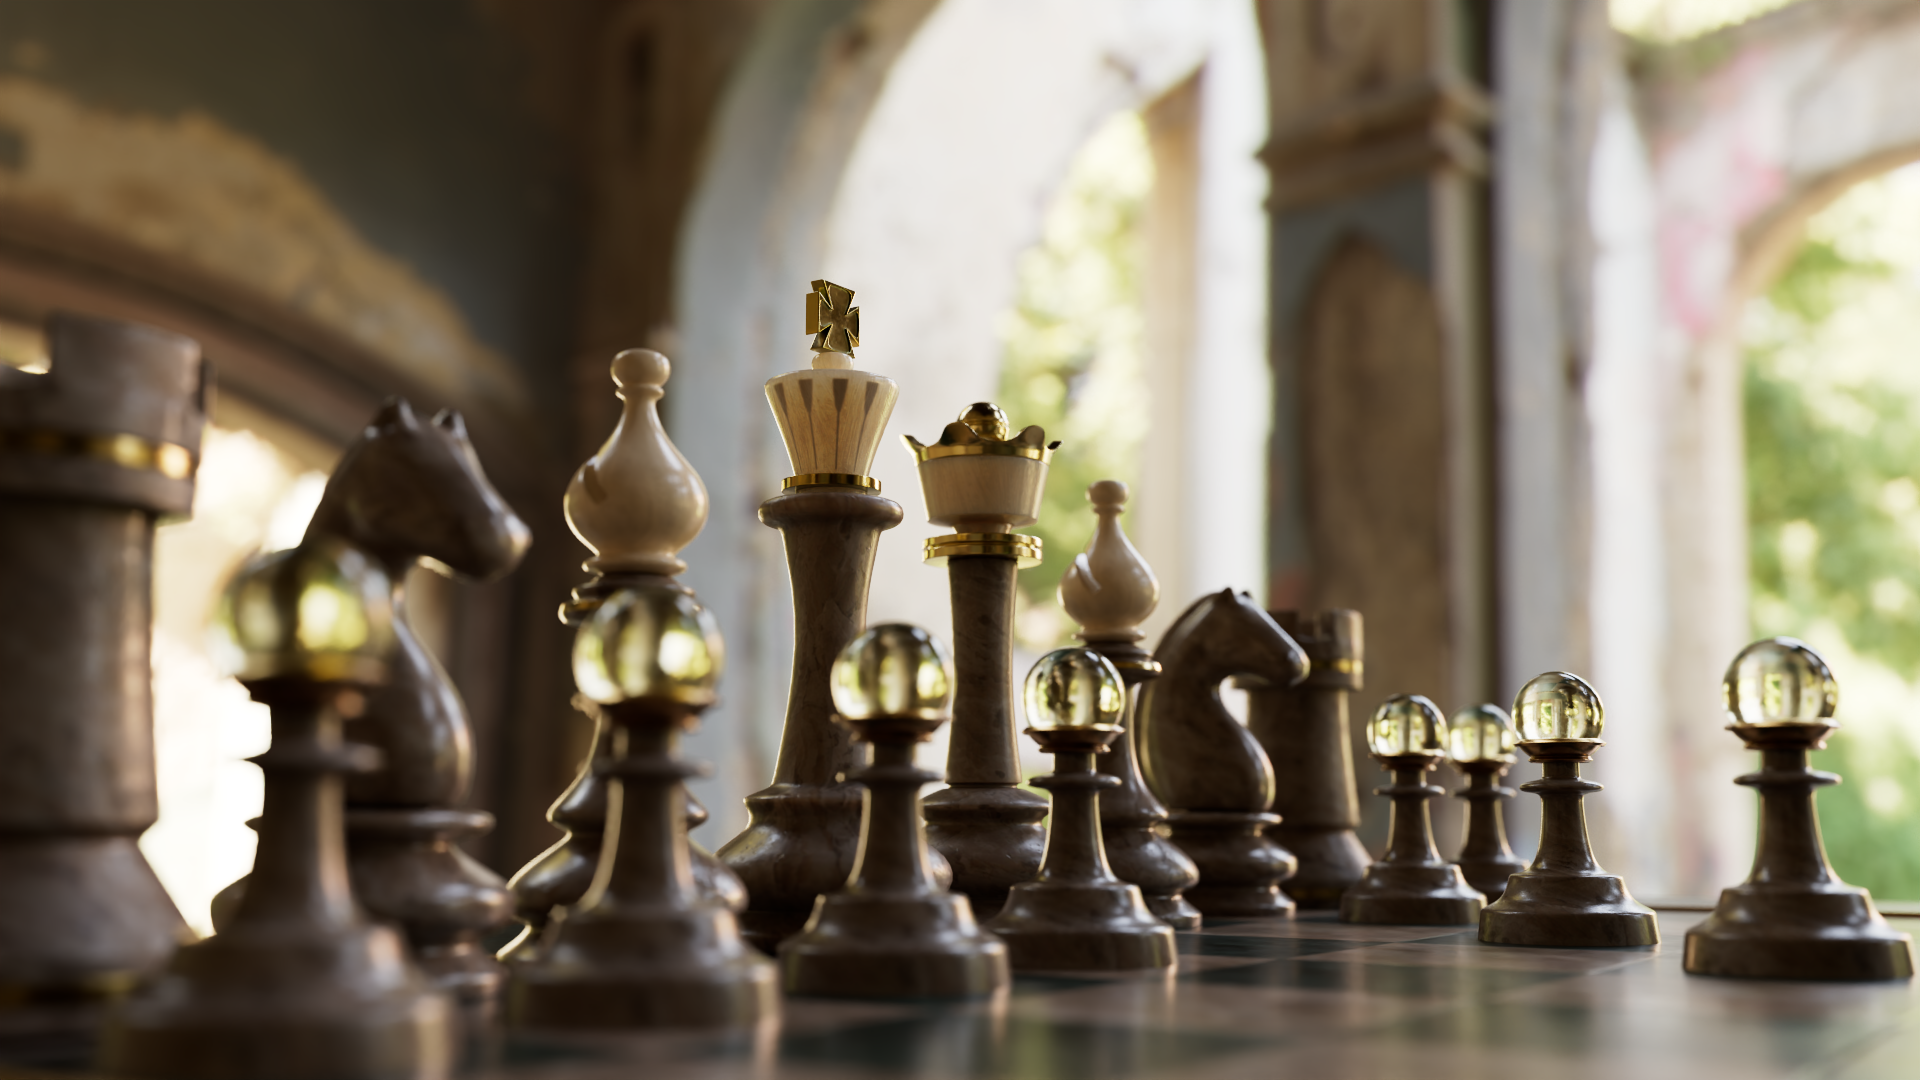 <Open Chess Set Image>